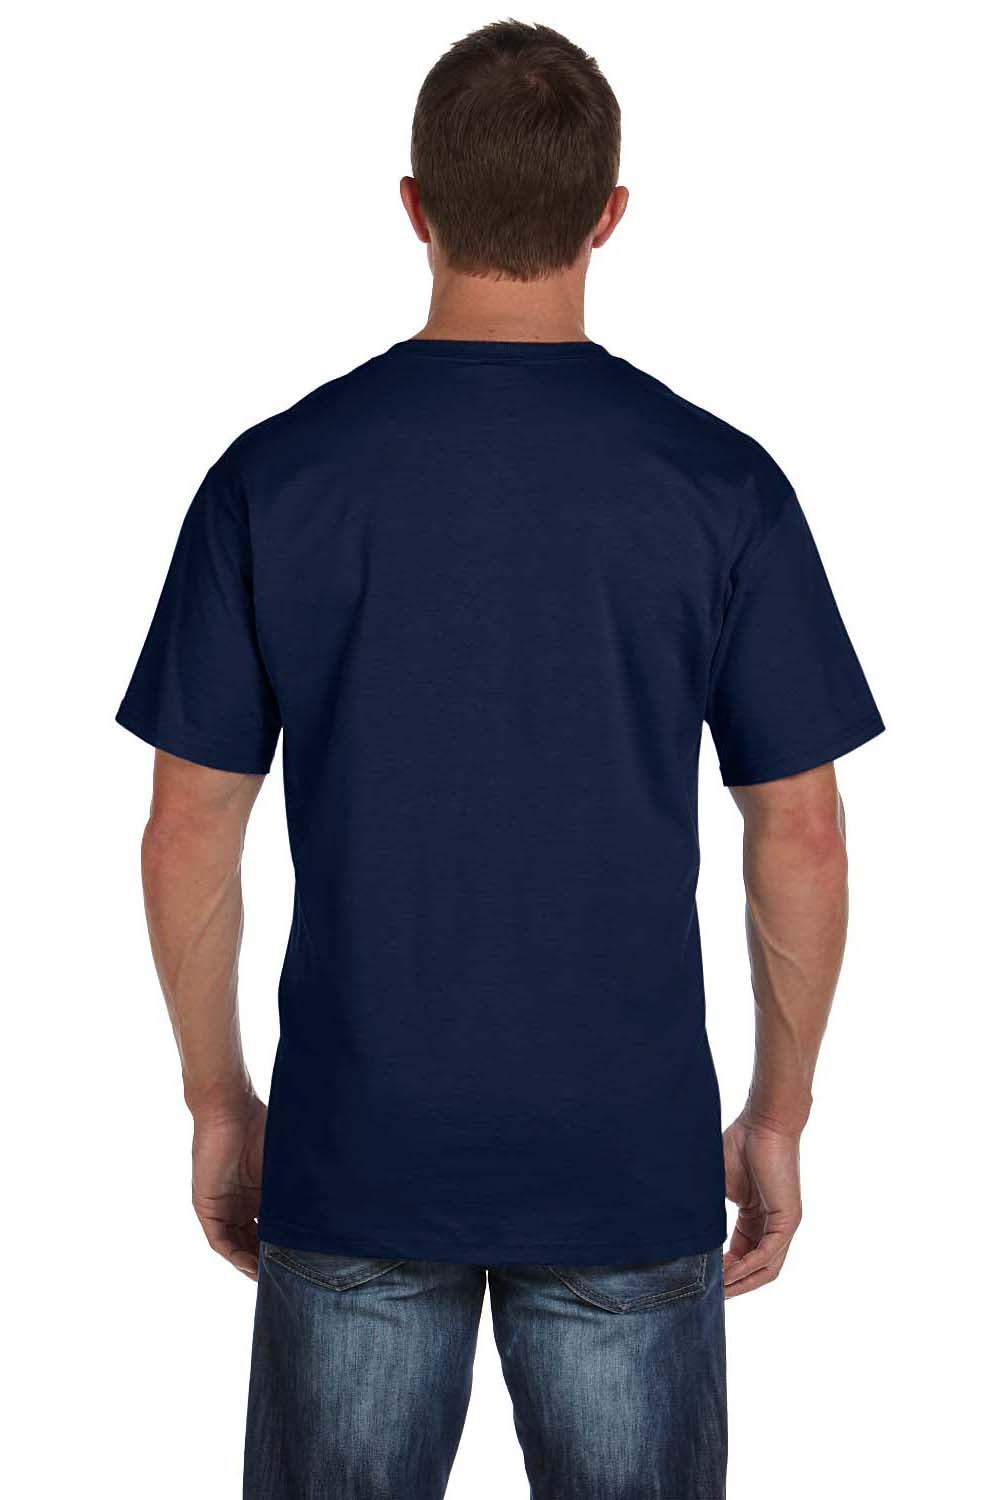 Fruit Of The Loom 3931P Mens HD Jersey Short Sleeve Crewneck T-Shirt w/ Pocket Navy Blue Back